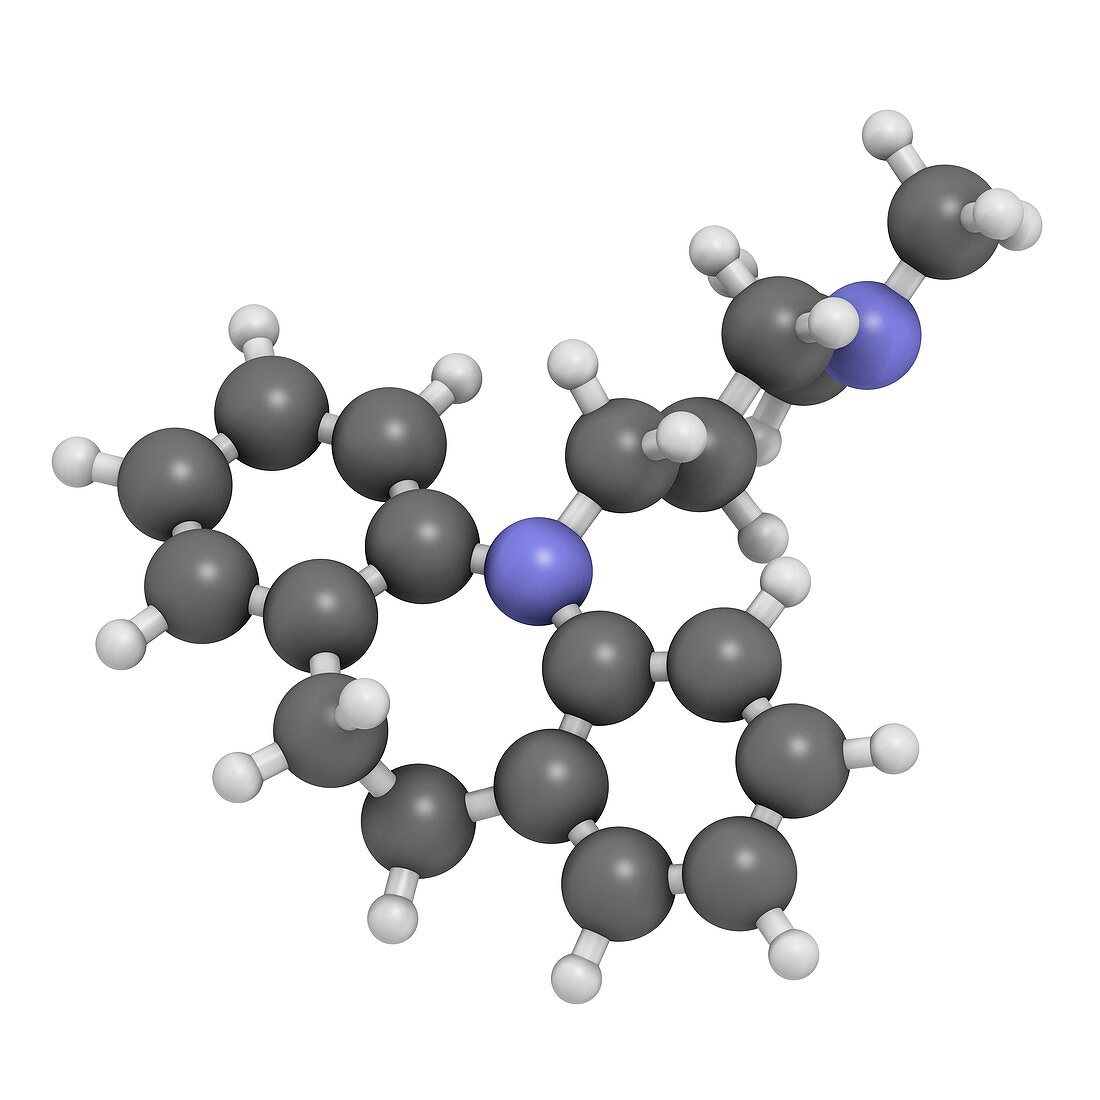 Imipramine antidepressant drug molecule